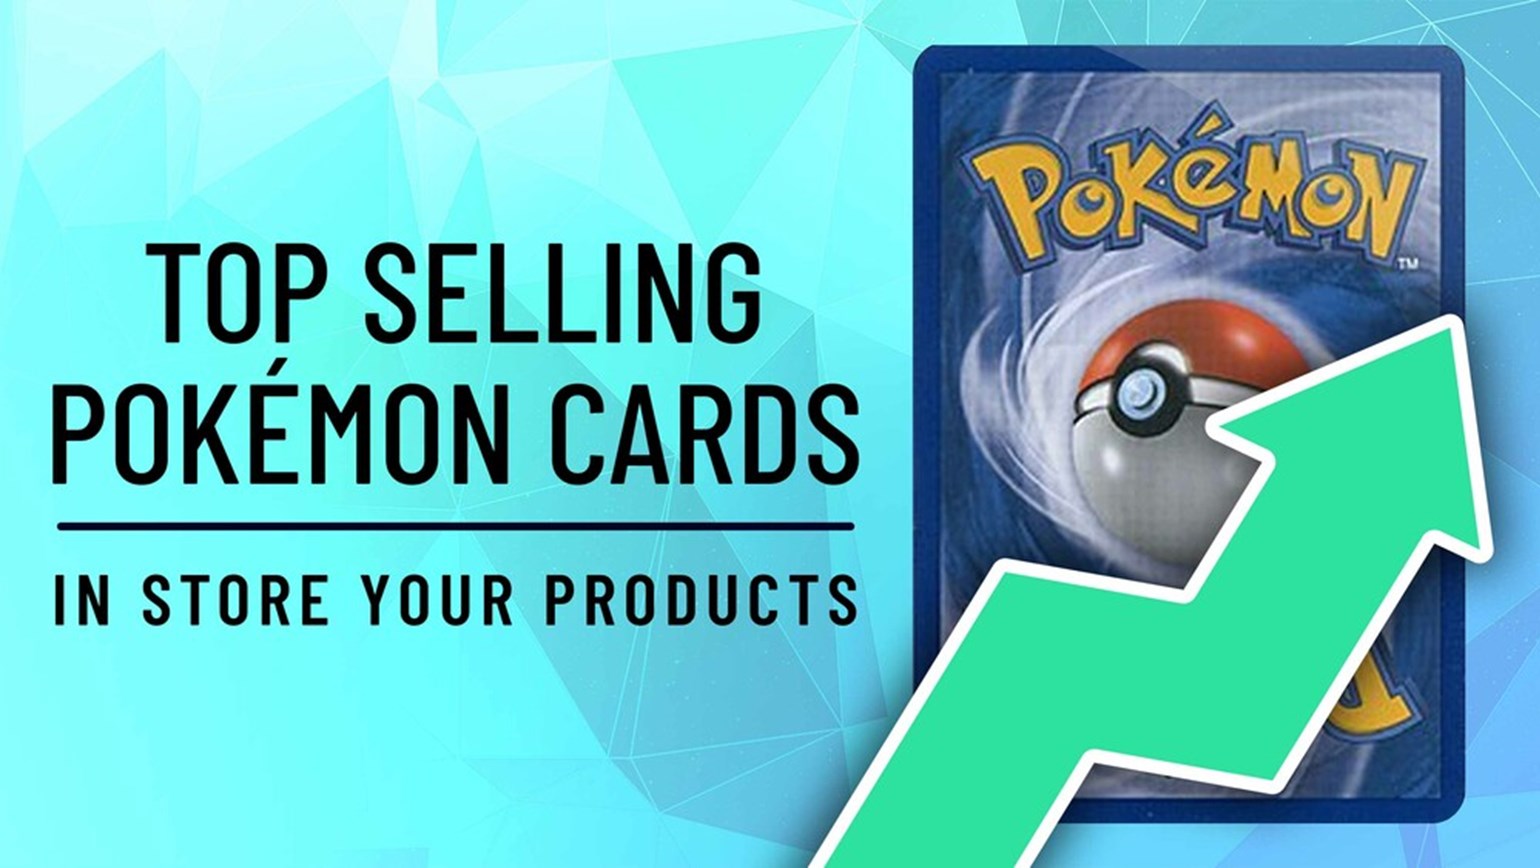 Pikachu zekrom gx - Card Games, Facebook Marketplace